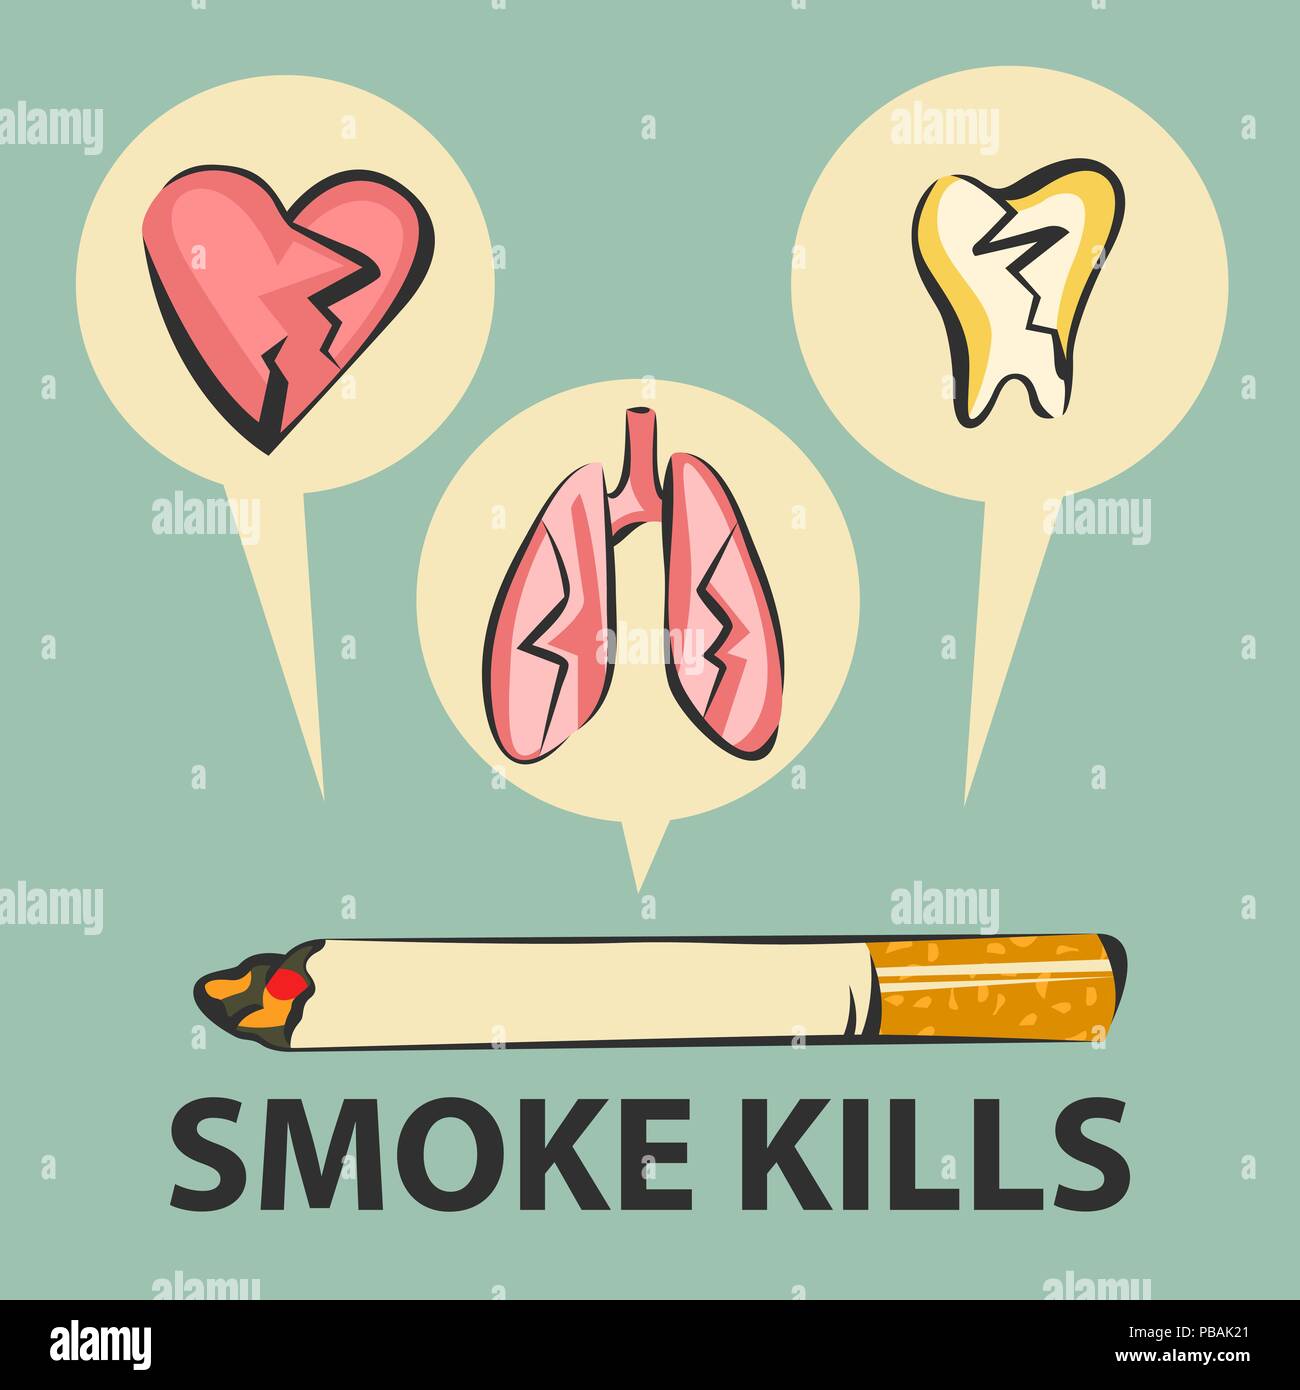 smoking kills essay